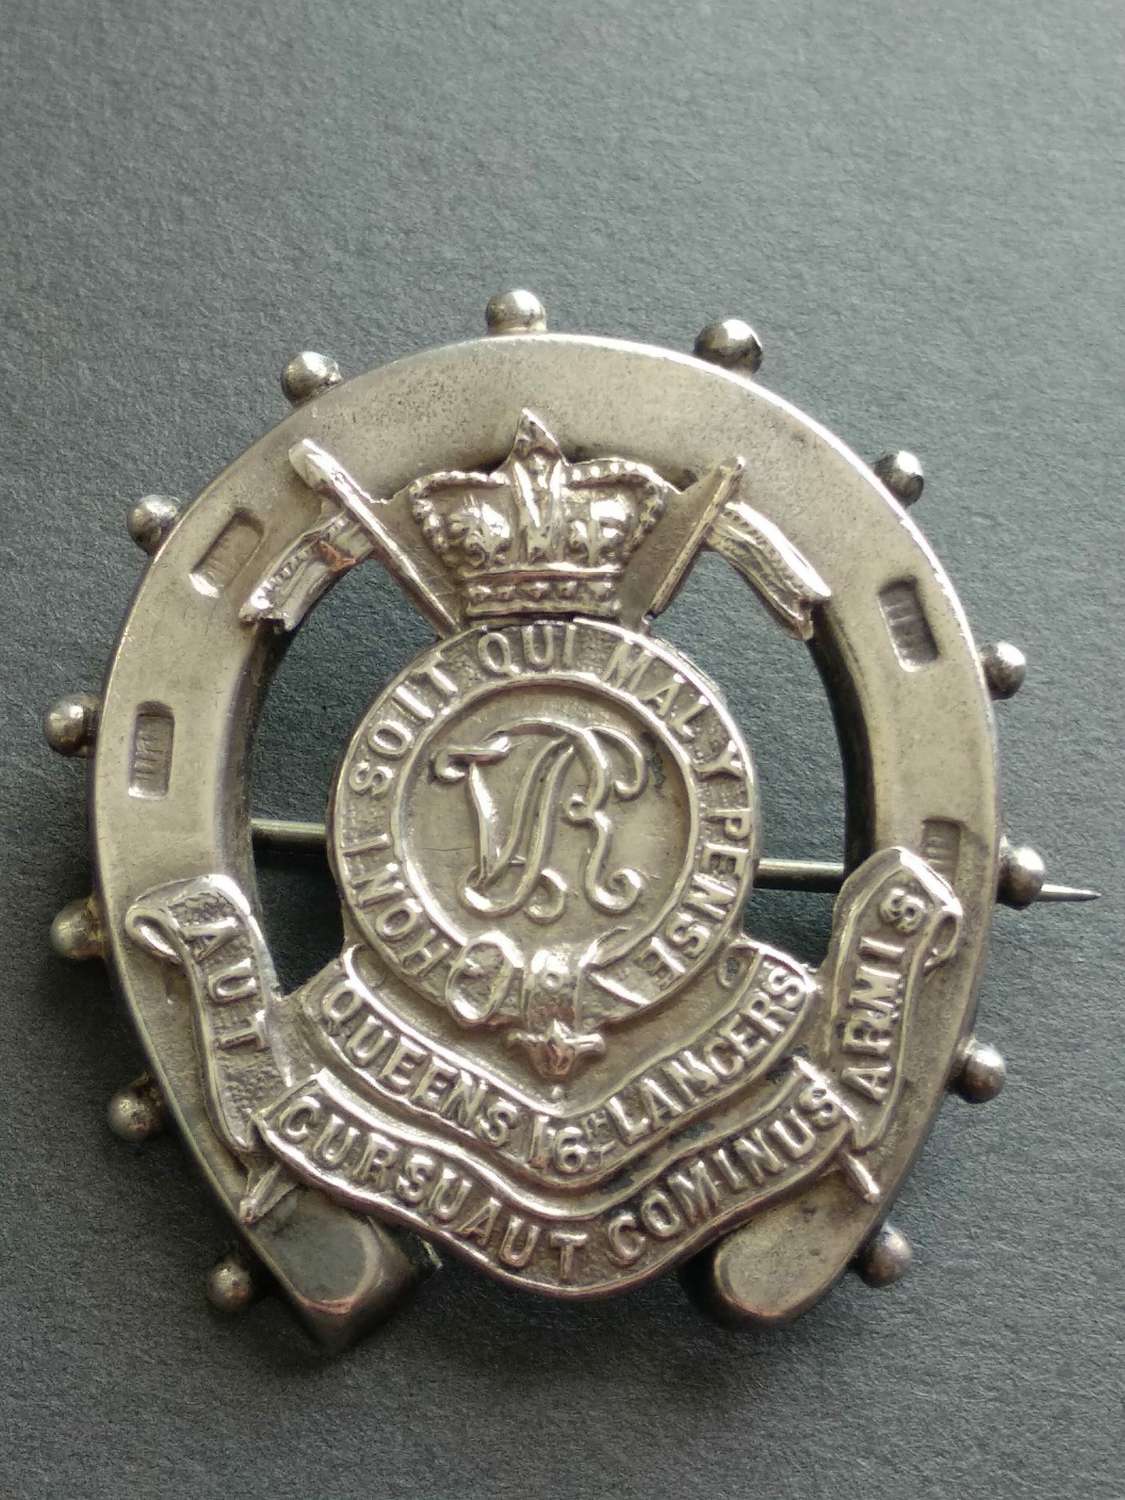 Rare 16th Queens Lancers Silver Commemorative Brooch